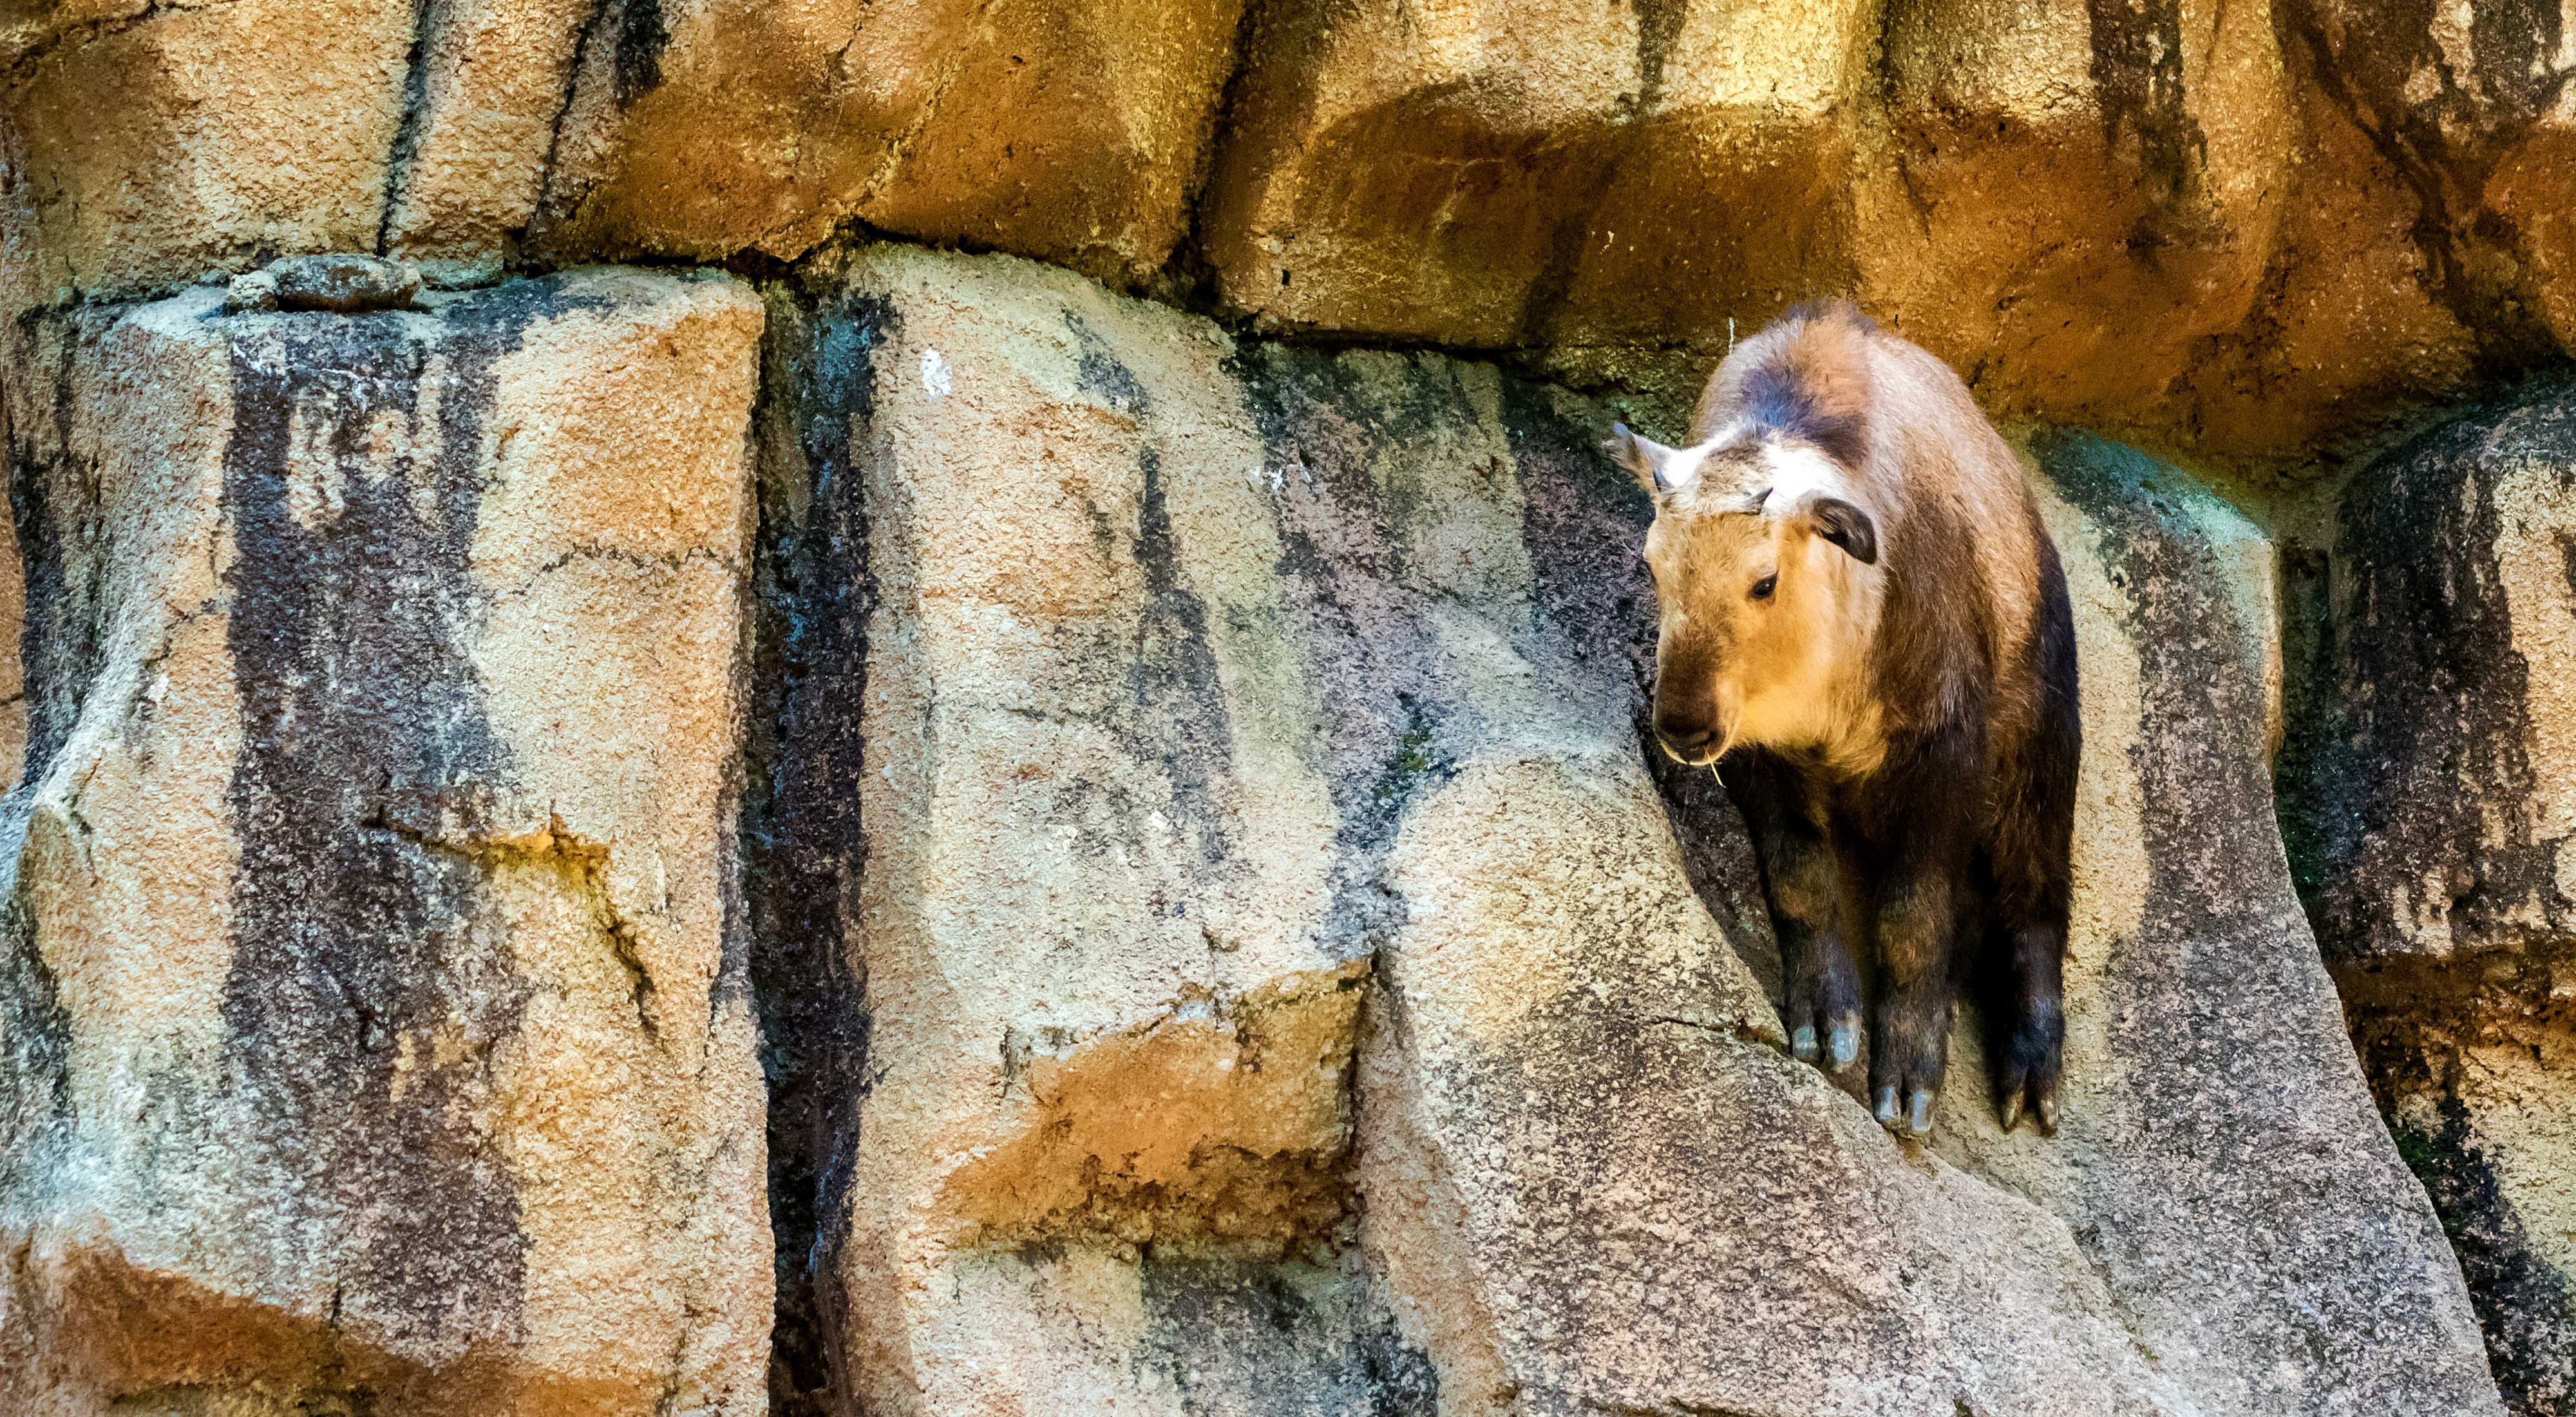 large ram-like animal on a rocky ledge